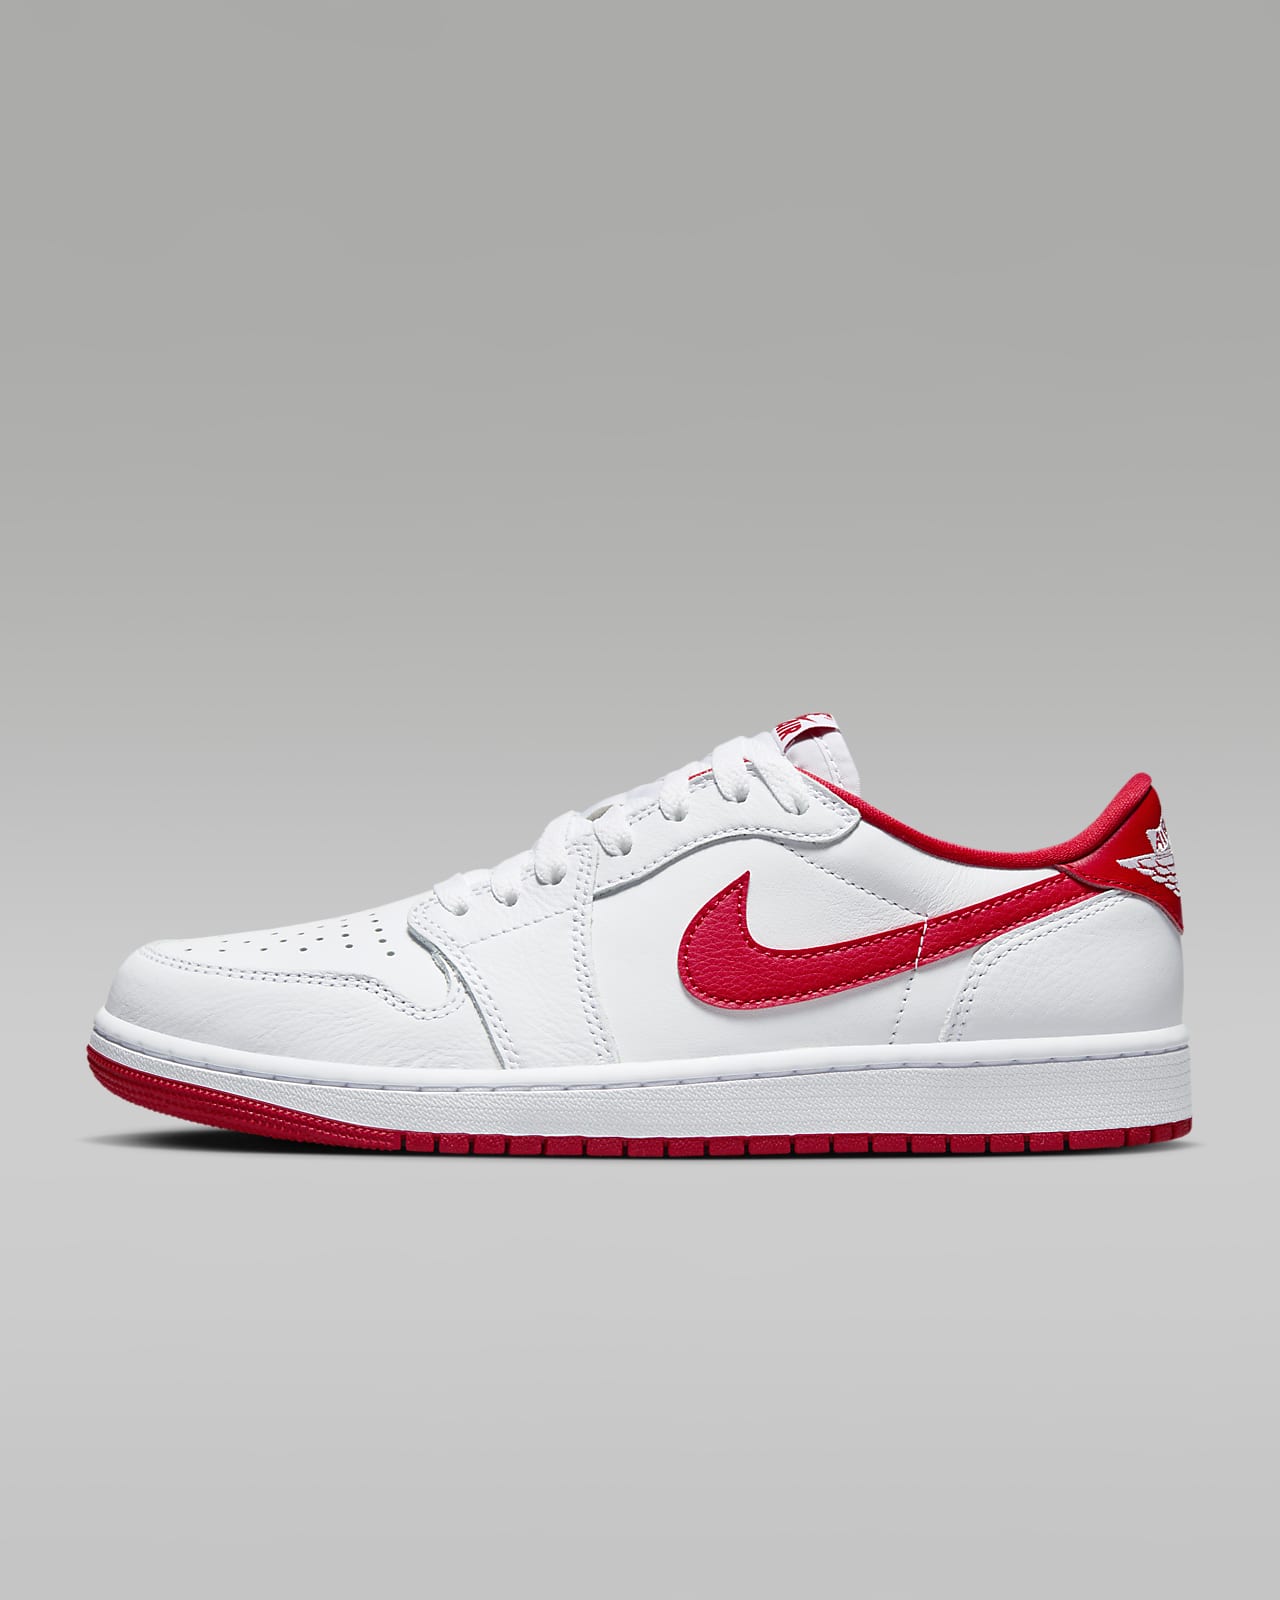 Air Jordan 1 Low OG 'White/Red' Men's Shoes. Nike ID